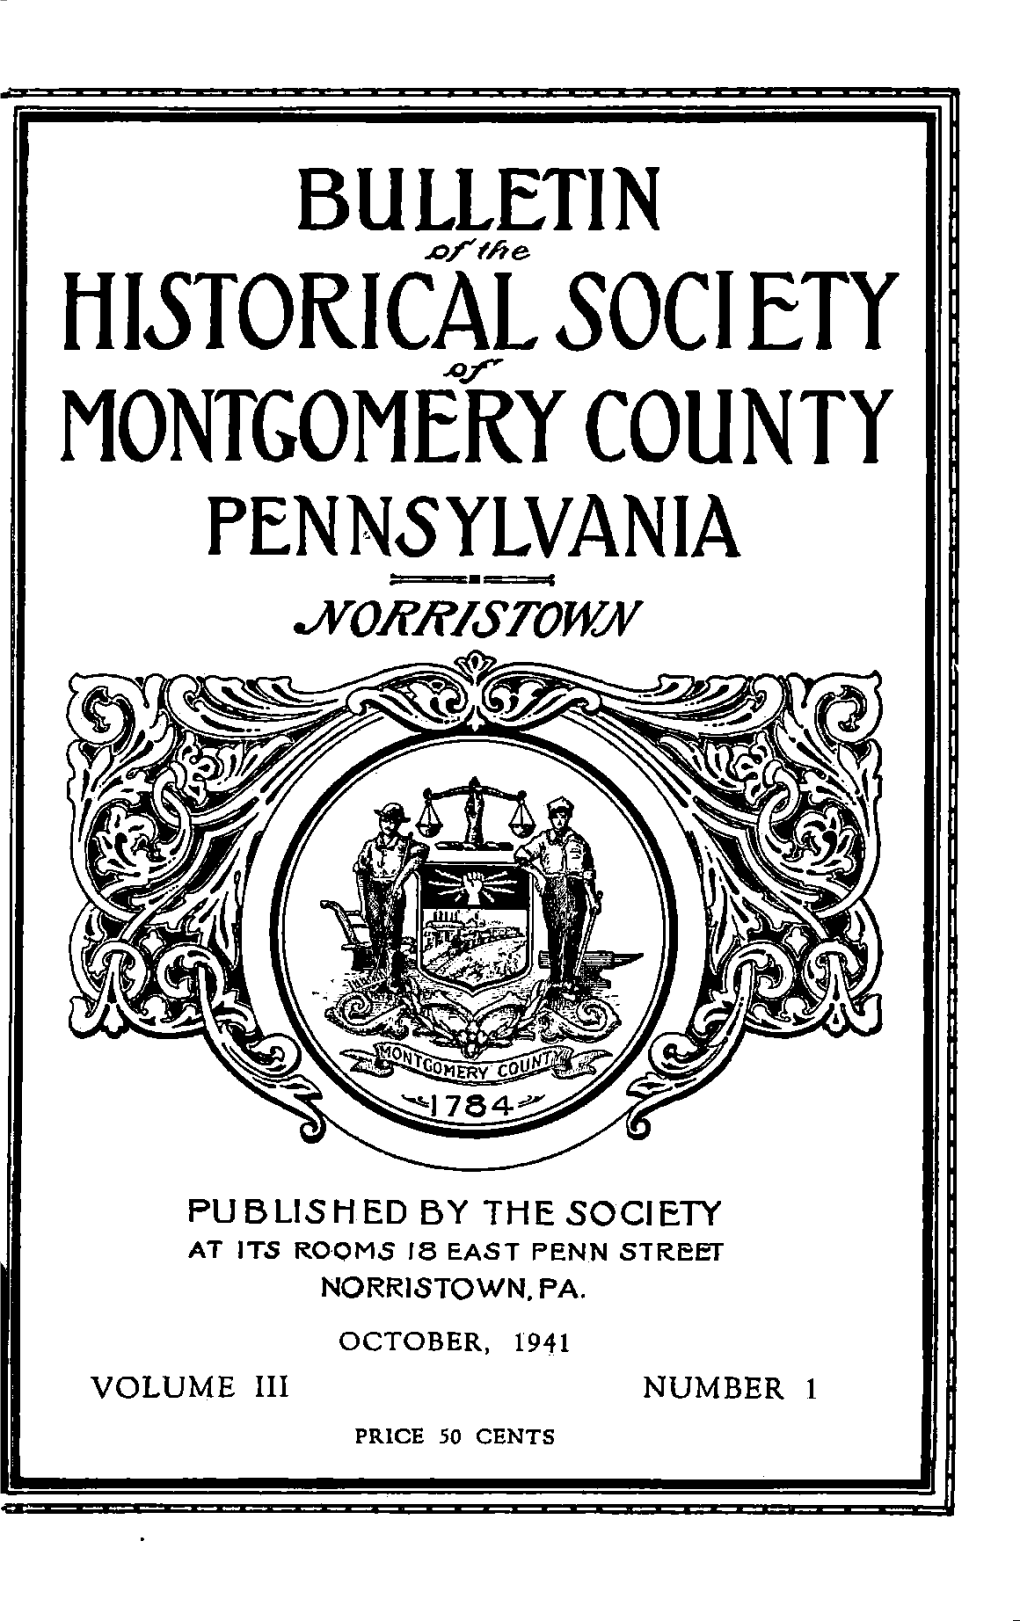 Historical 50Ciety Montgomery County Pennsylvania Jv^Orr/Stown